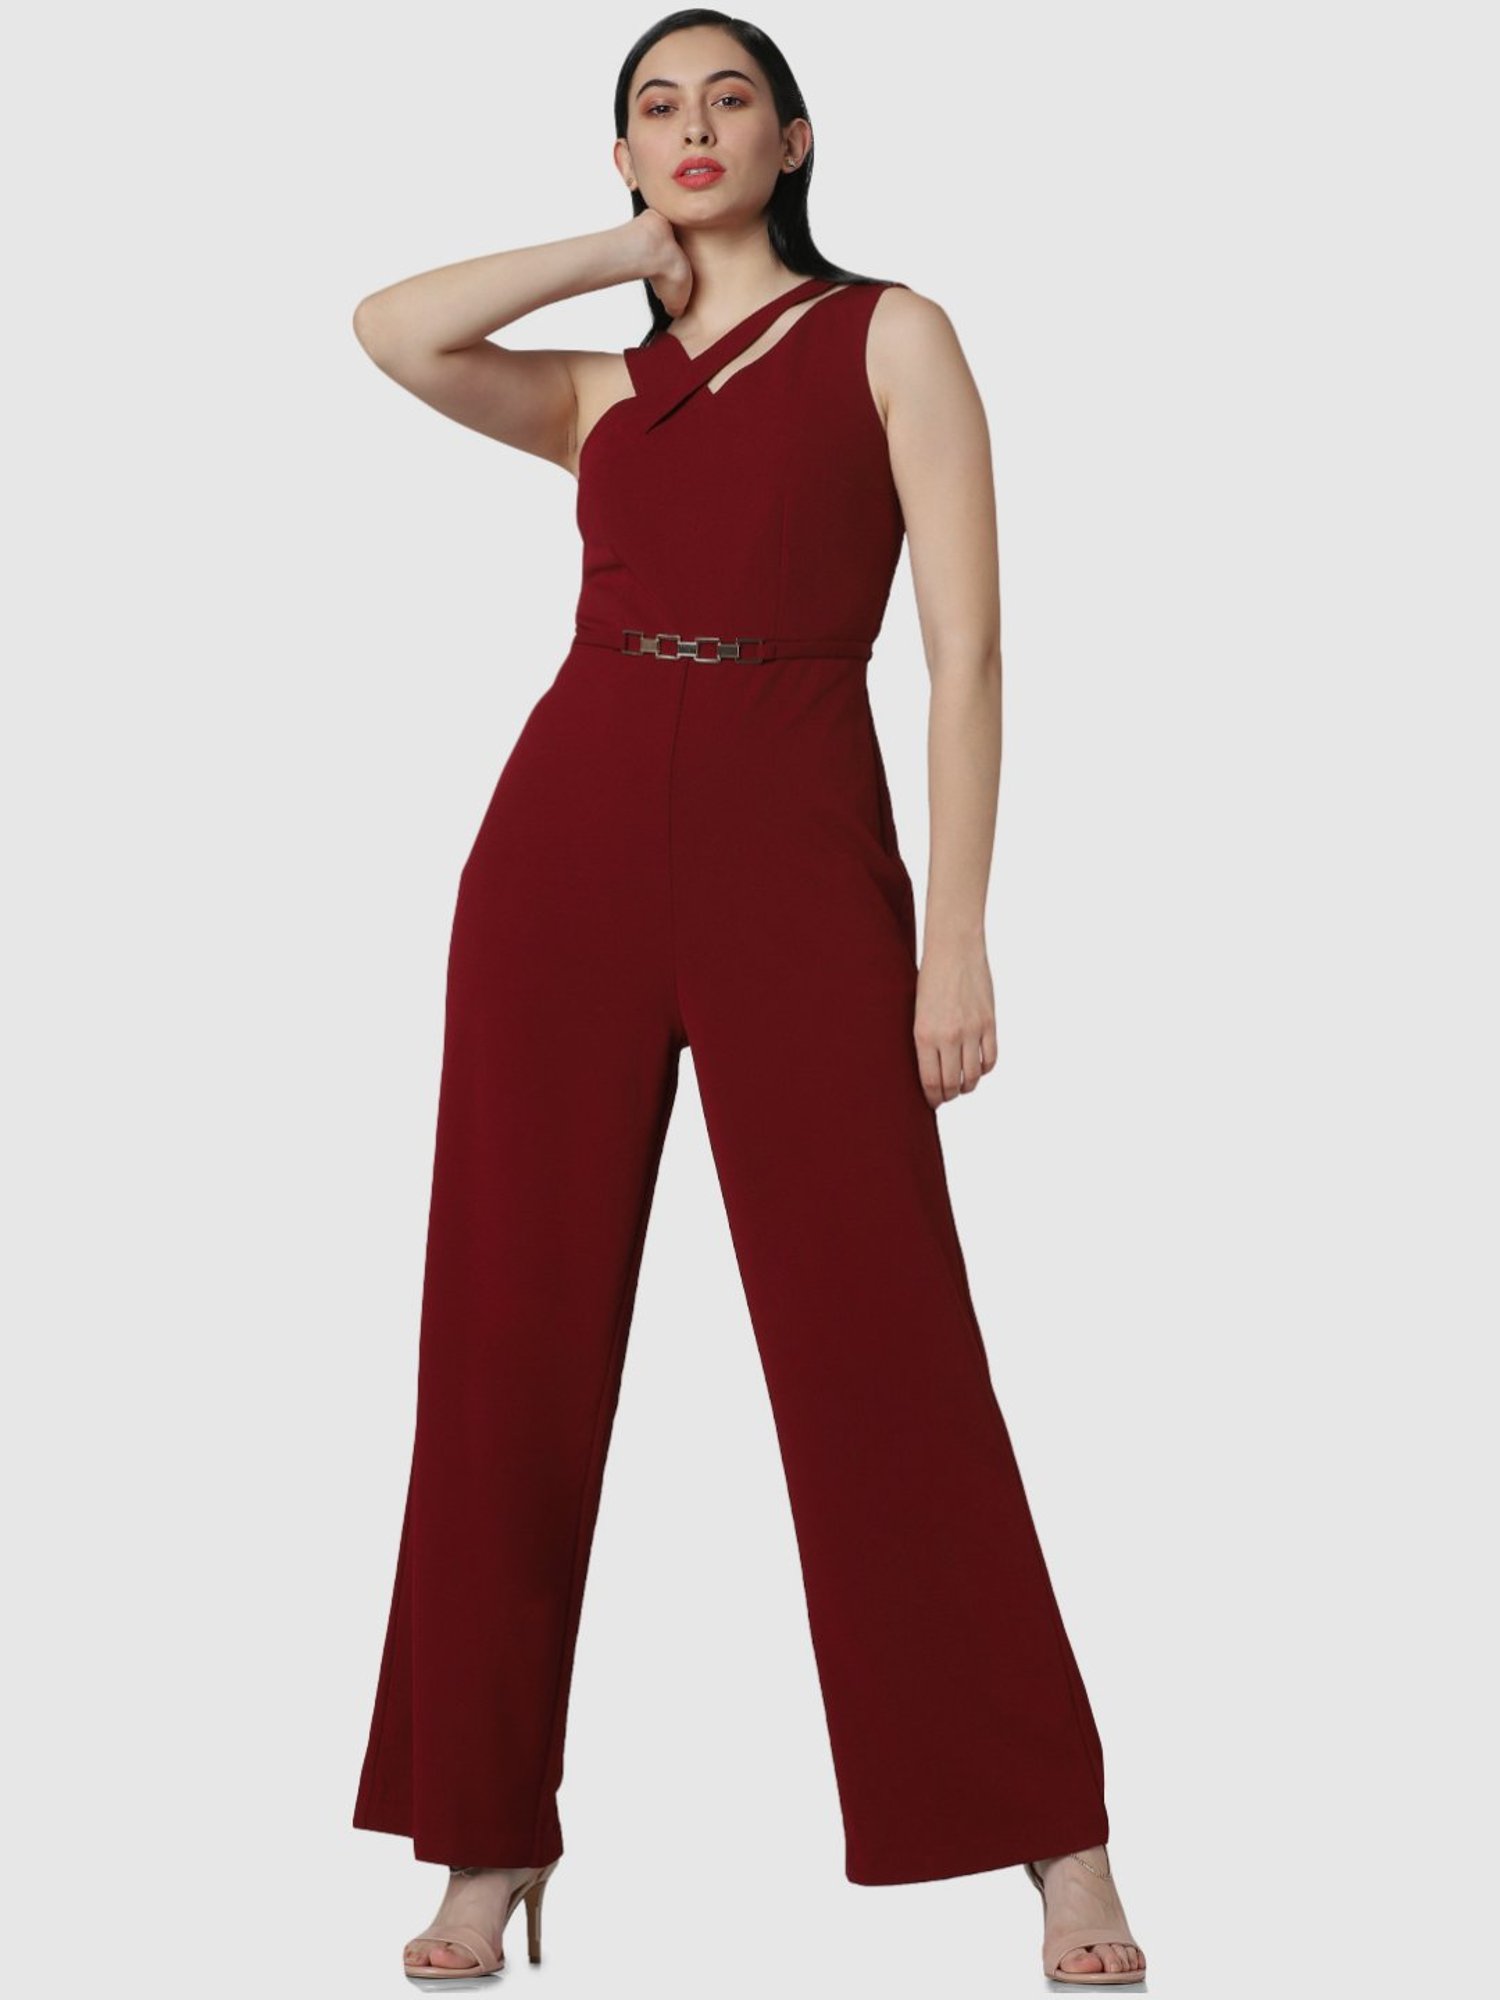 Vero Moda Maroon Length Jumpsuit for Women Online @ Tata CLiQ